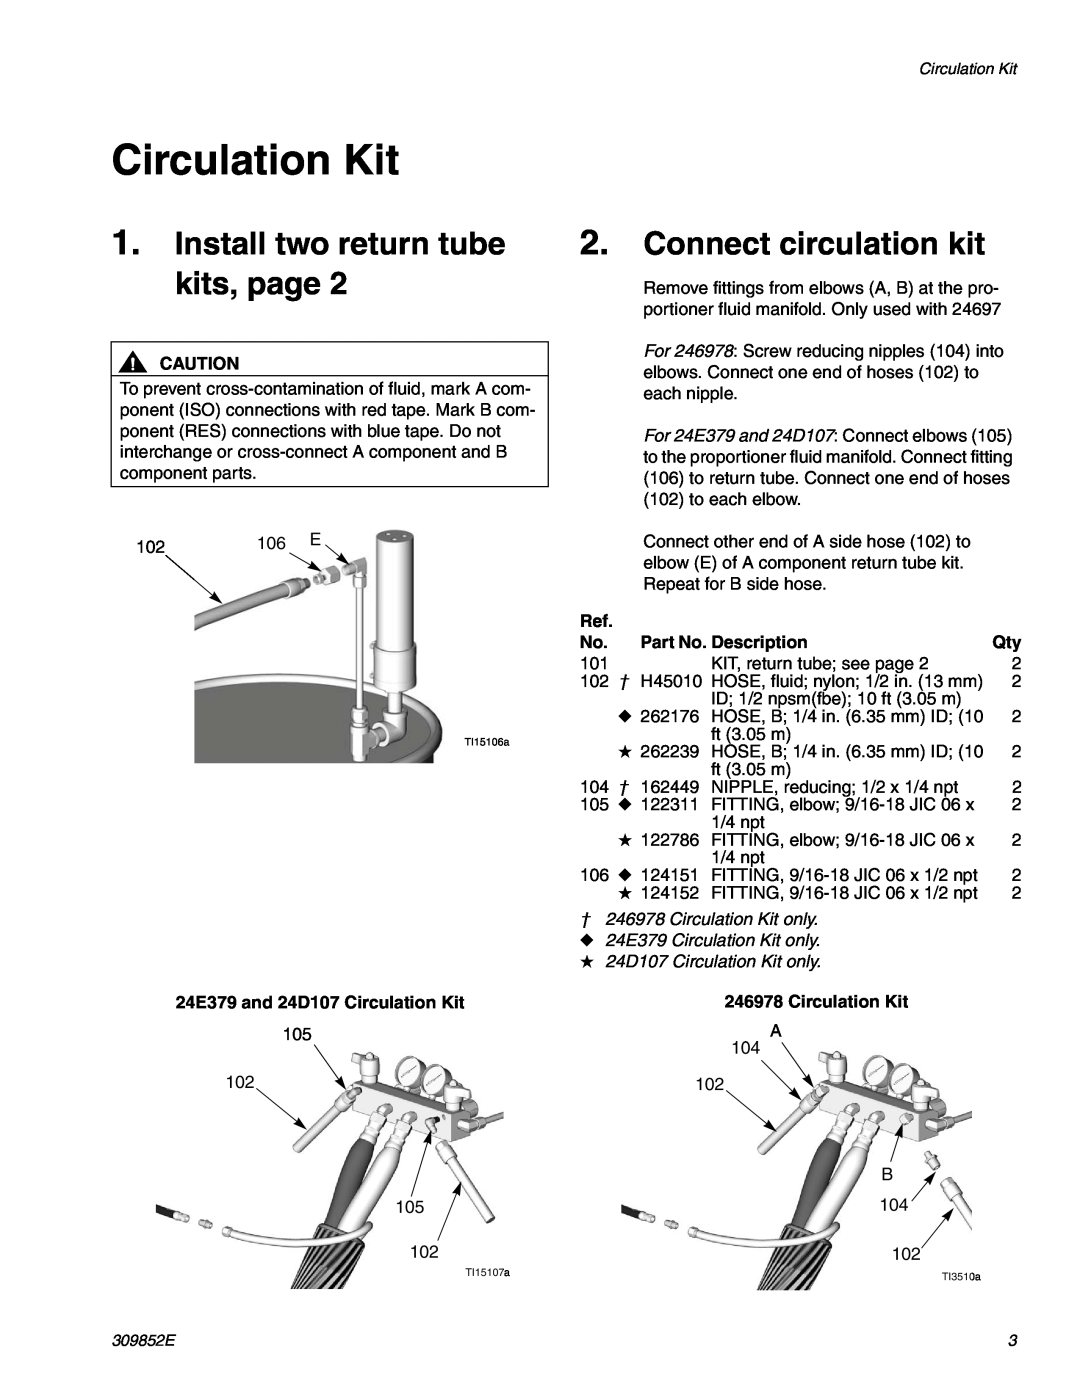 Graco 246477, 246978 Circulation Kit, Install two return tube kits, page, Connect circulation kit, Part No. Description 